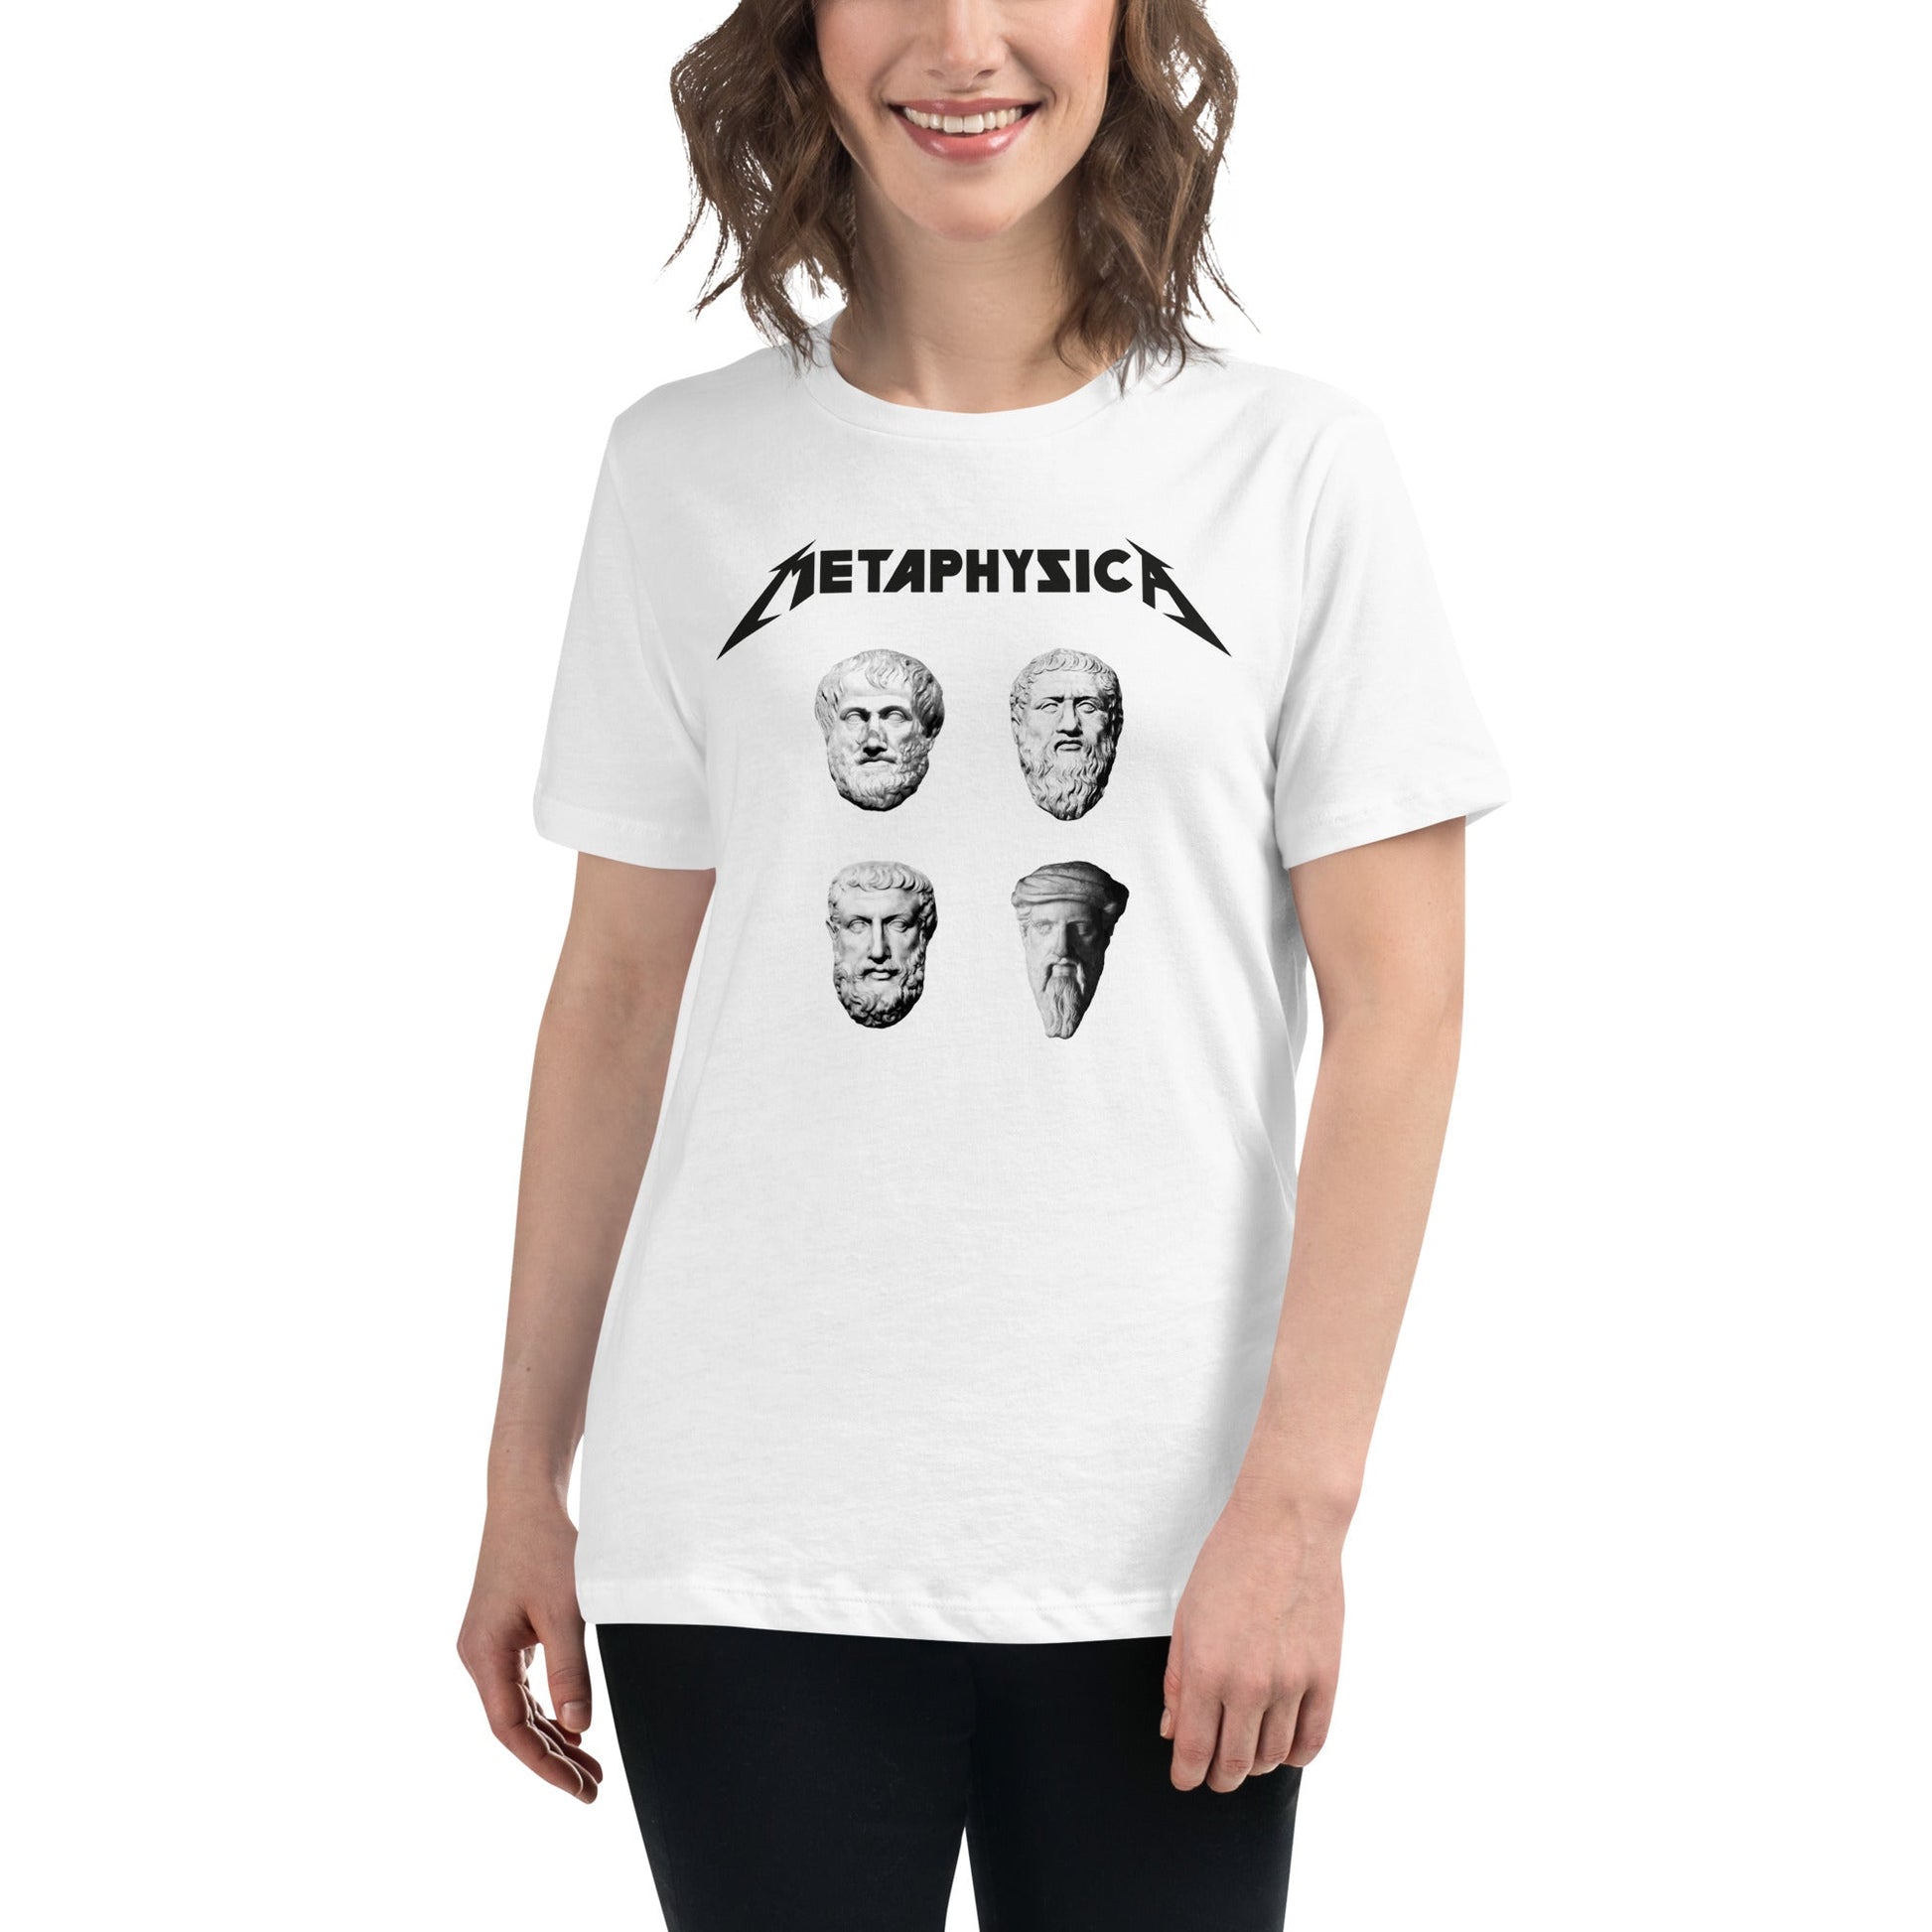 Metaphysica - The Four Wise Men - Women's T-Shirt